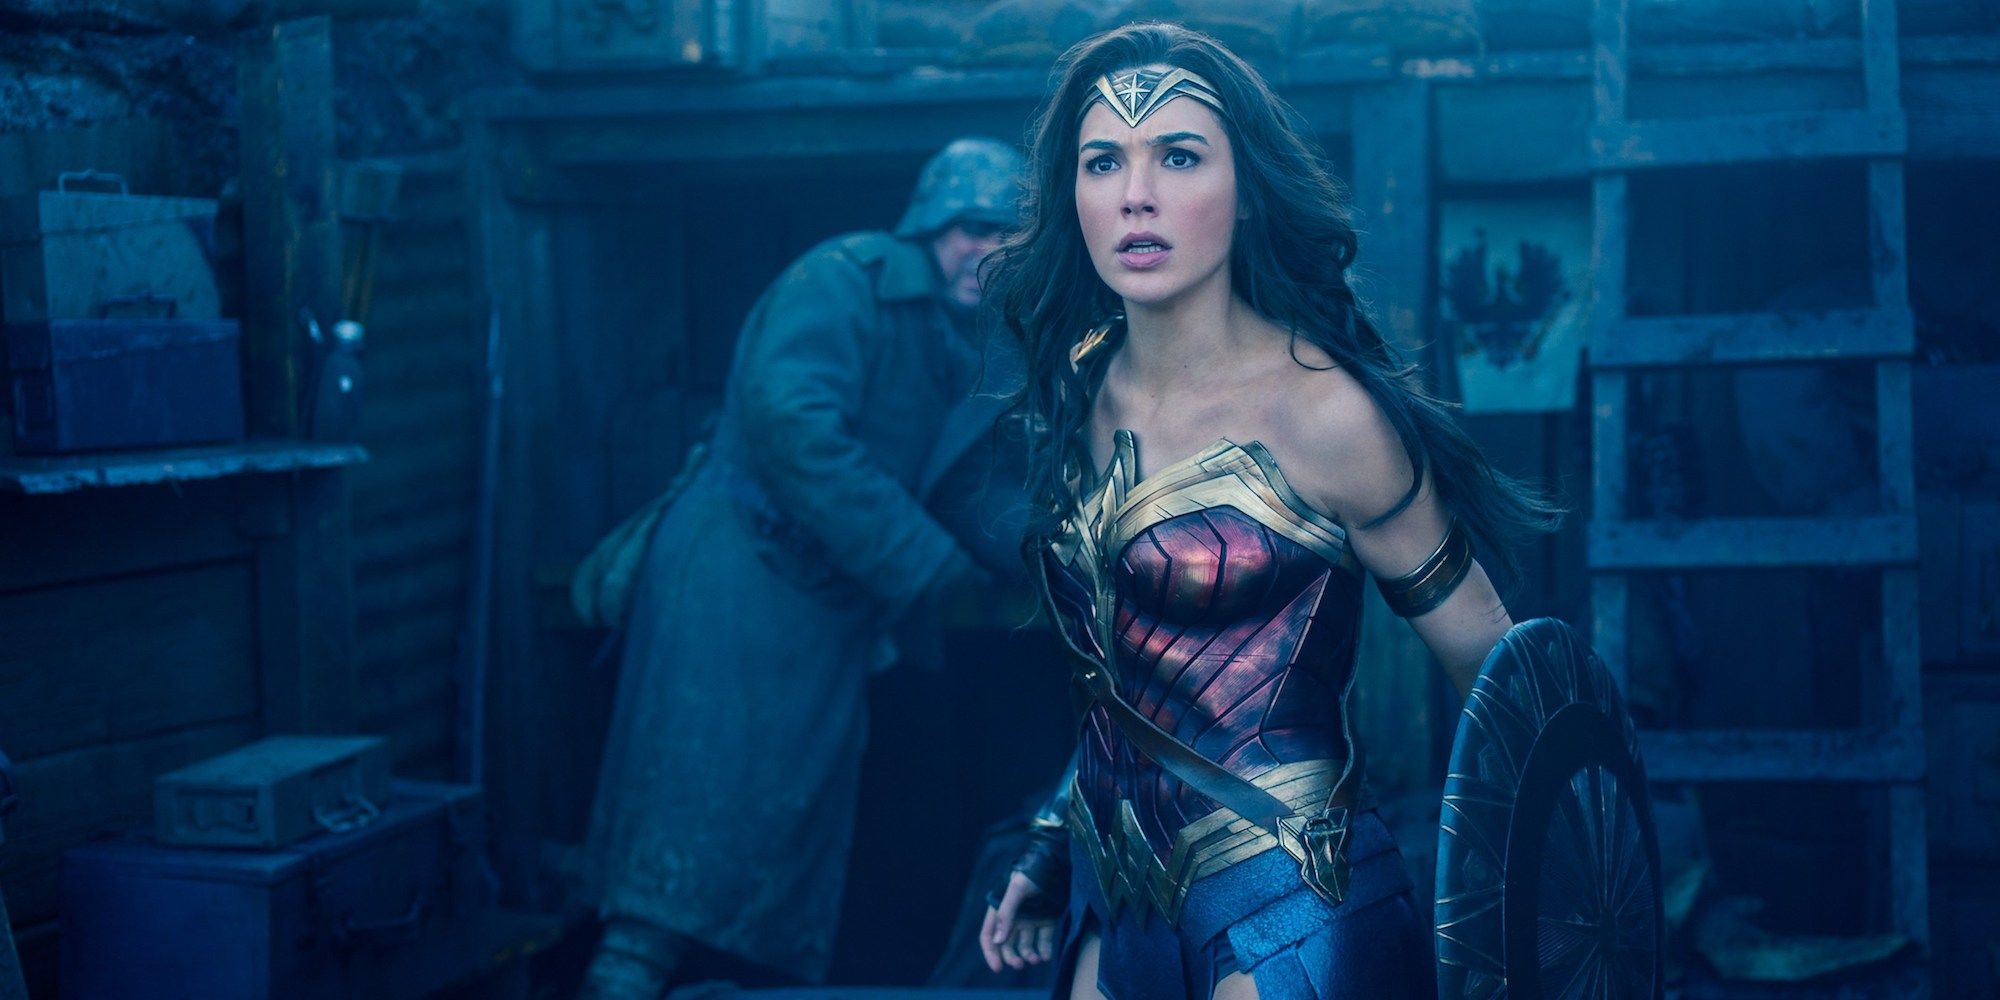 Wonder Woman: No Man's Land Scene Almost Cut